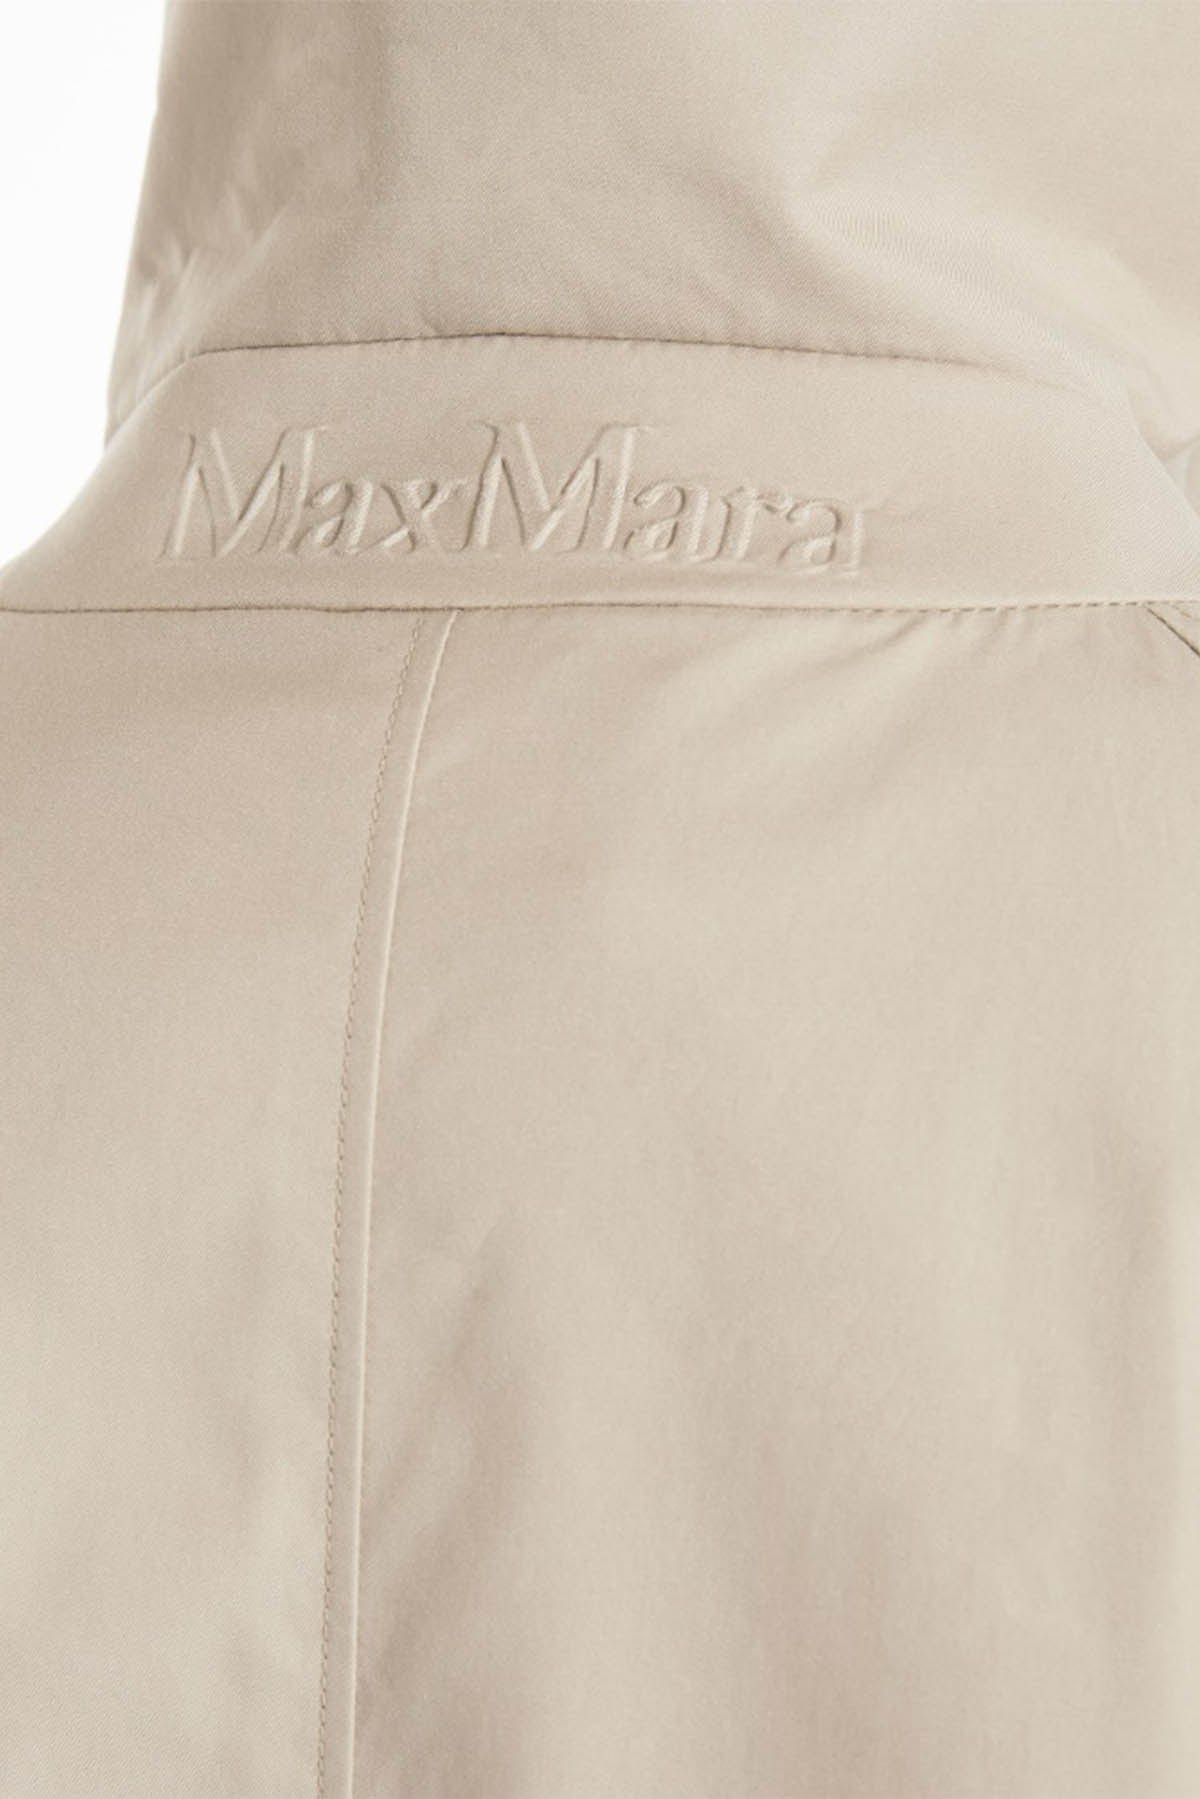 MAXMARA&#39;S BRANDS SOPRABITO-IMPERMEABILE  Impermeabile Trench Beige The Cube Max Mara Ftrench